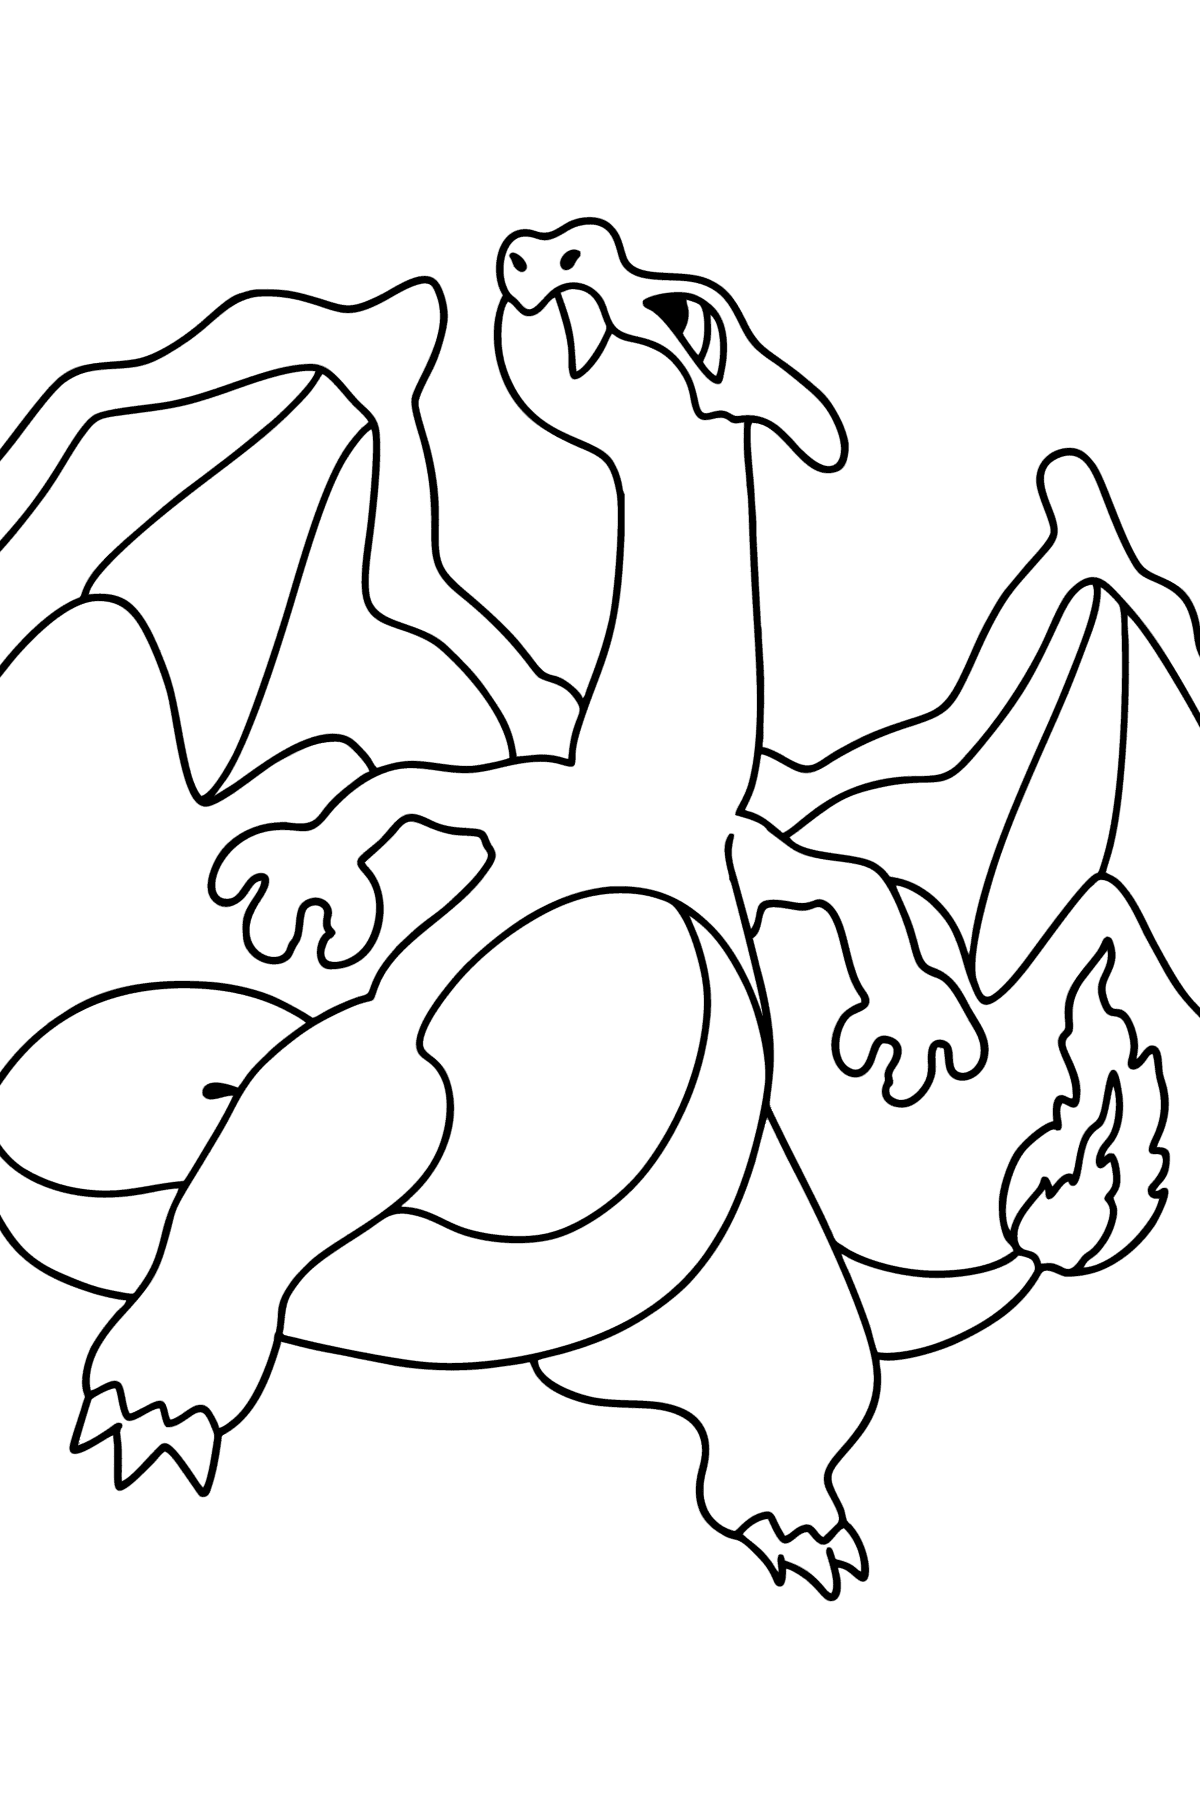 Раскраска Покемон (Pokemon Go) Charizard - Картинки для Детей